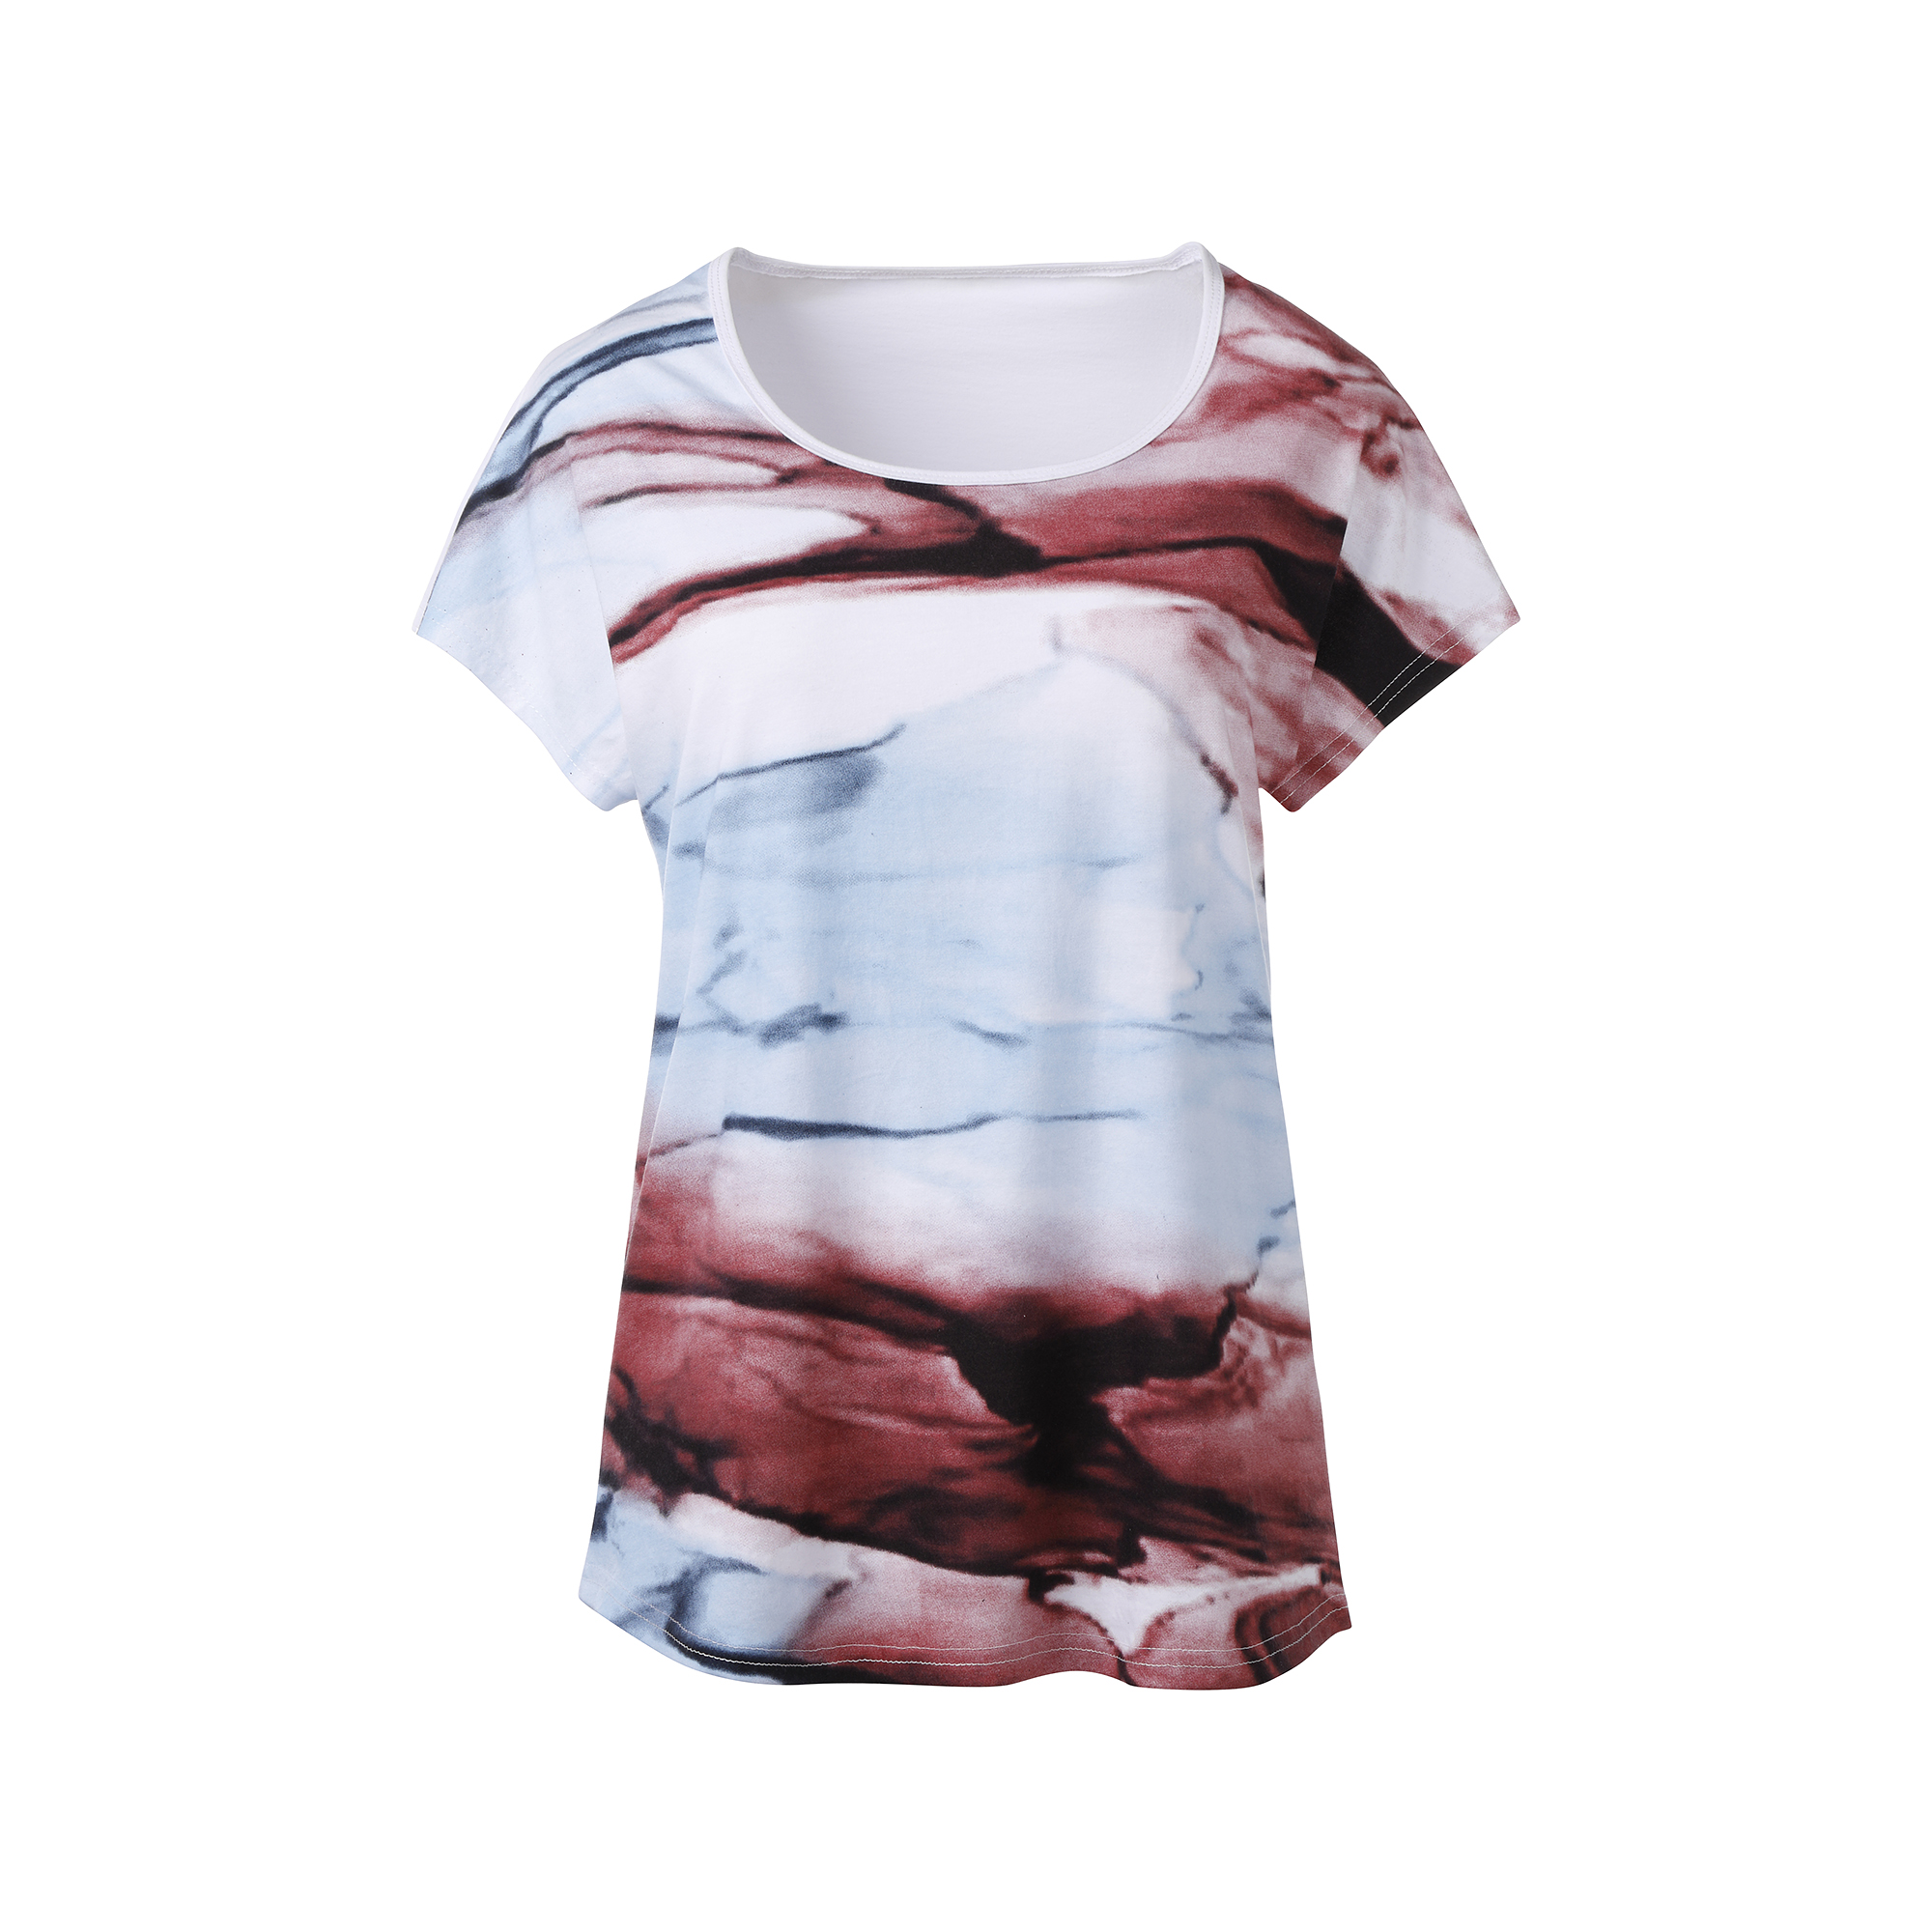 T-Shirt Damen Linea Primero CLAIRE Women Farbe: angel falls Größe: 52